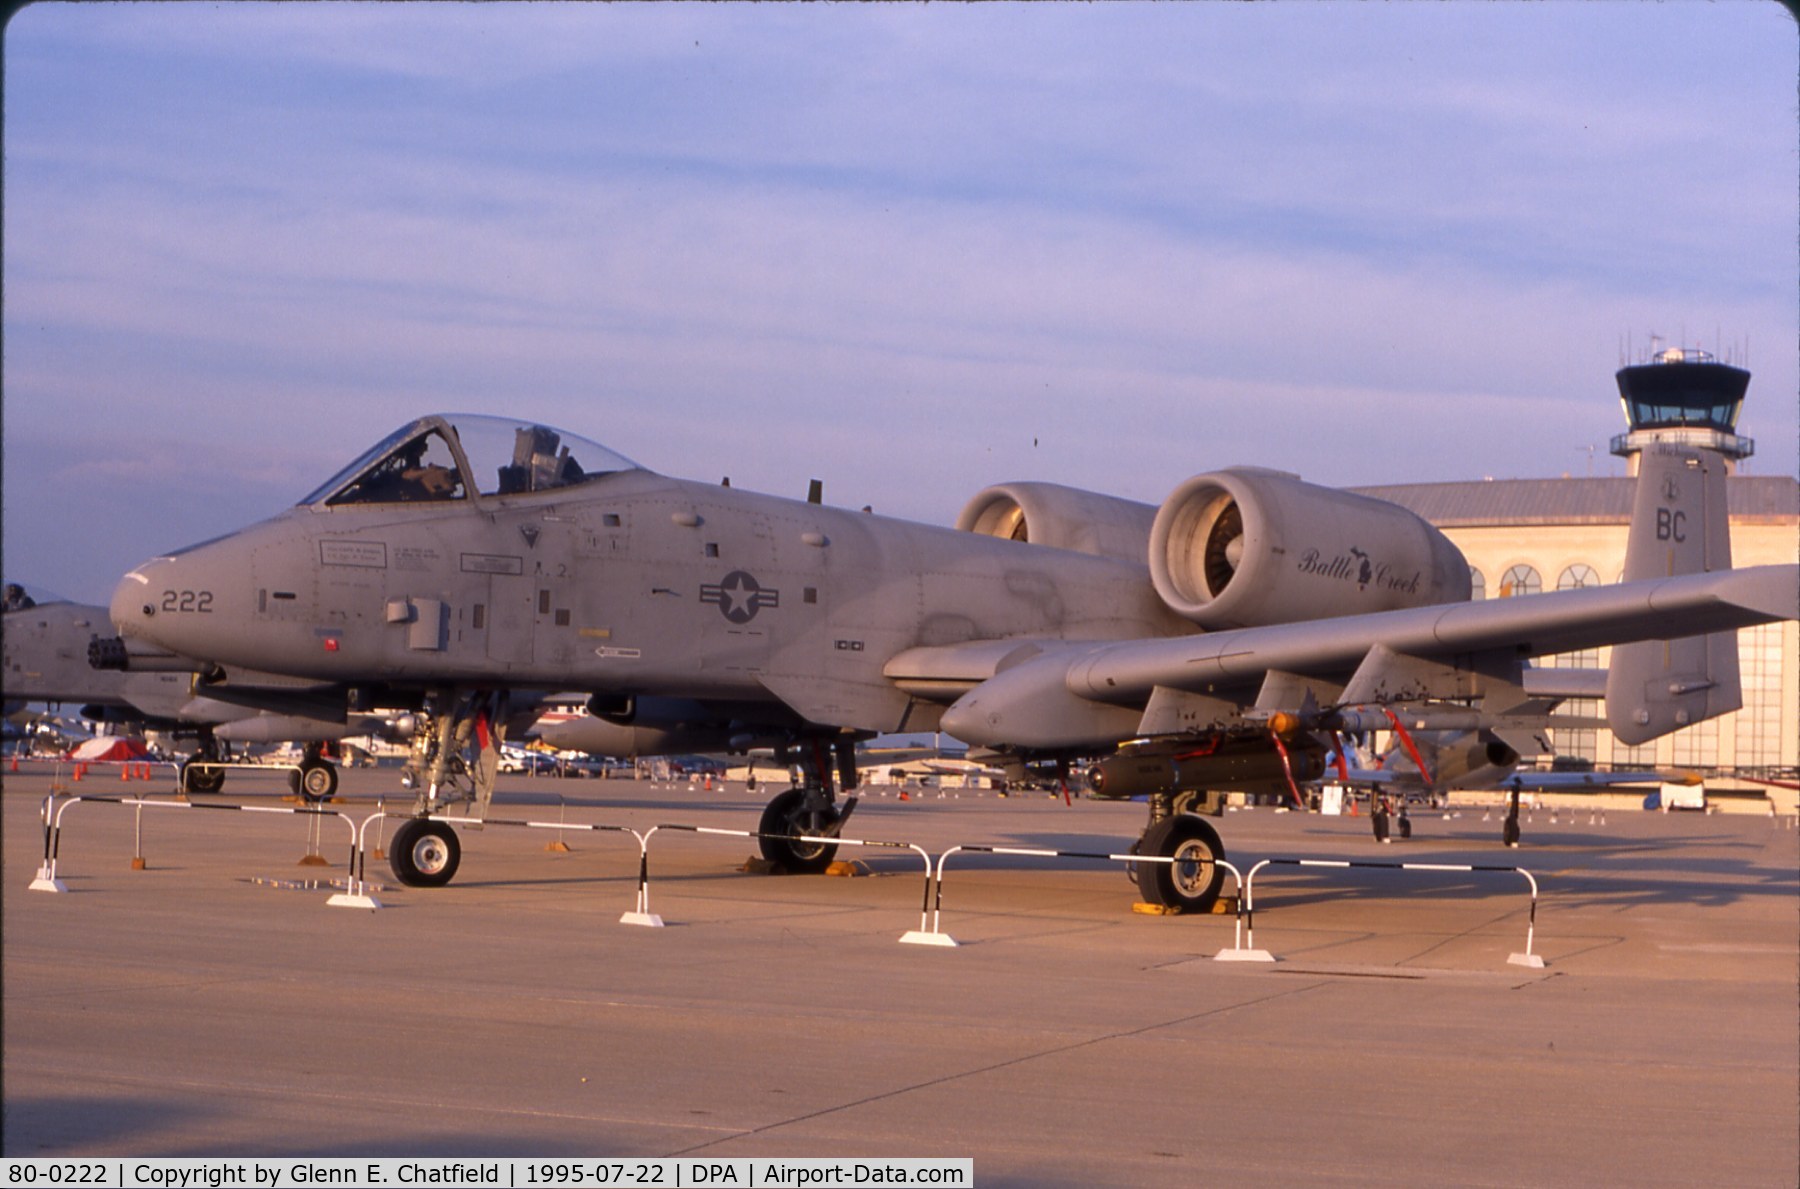 80-0222, 1980 Fairchild Republic A-10A Thunderbolt II C/N A10-0572, A-10A on the ramp just after dawn